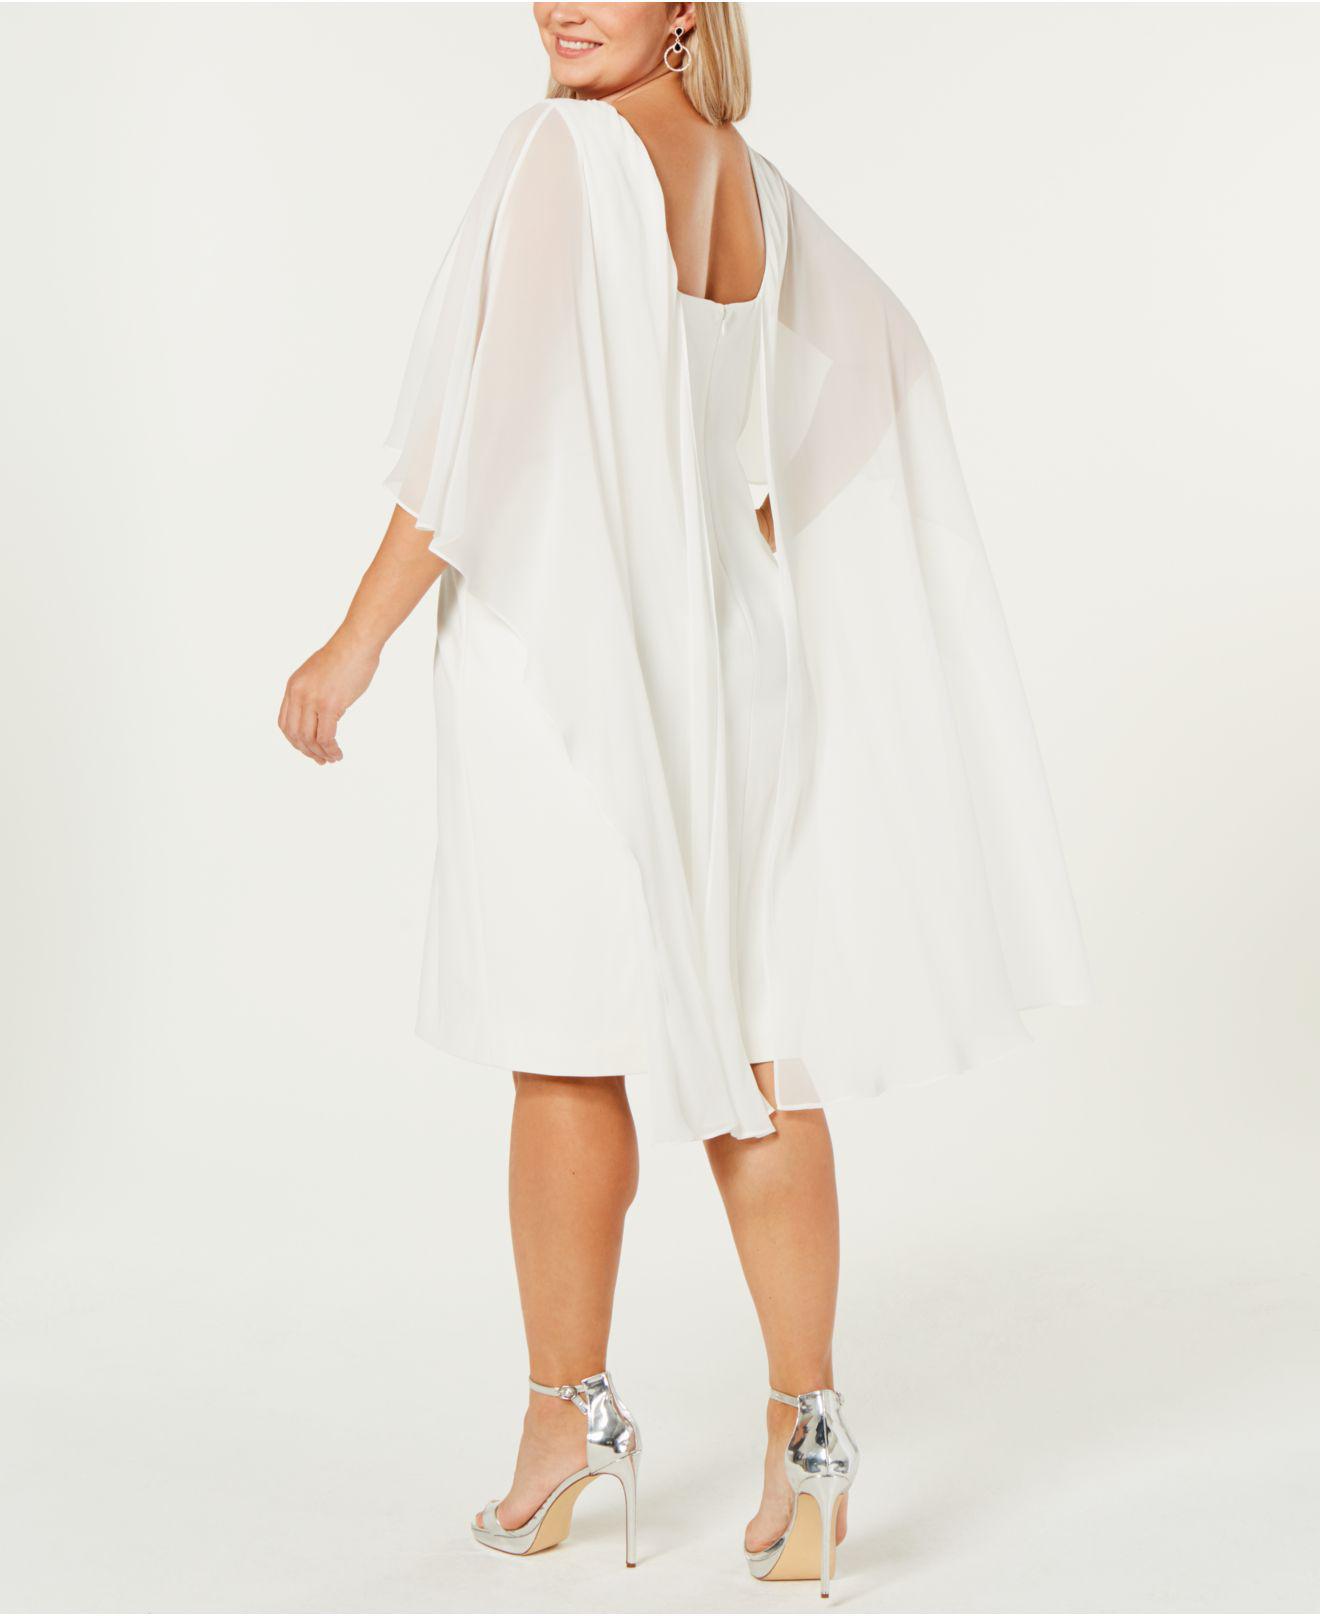 Calvin Klein Plus Size Capelet Sheath Dress - Macy's